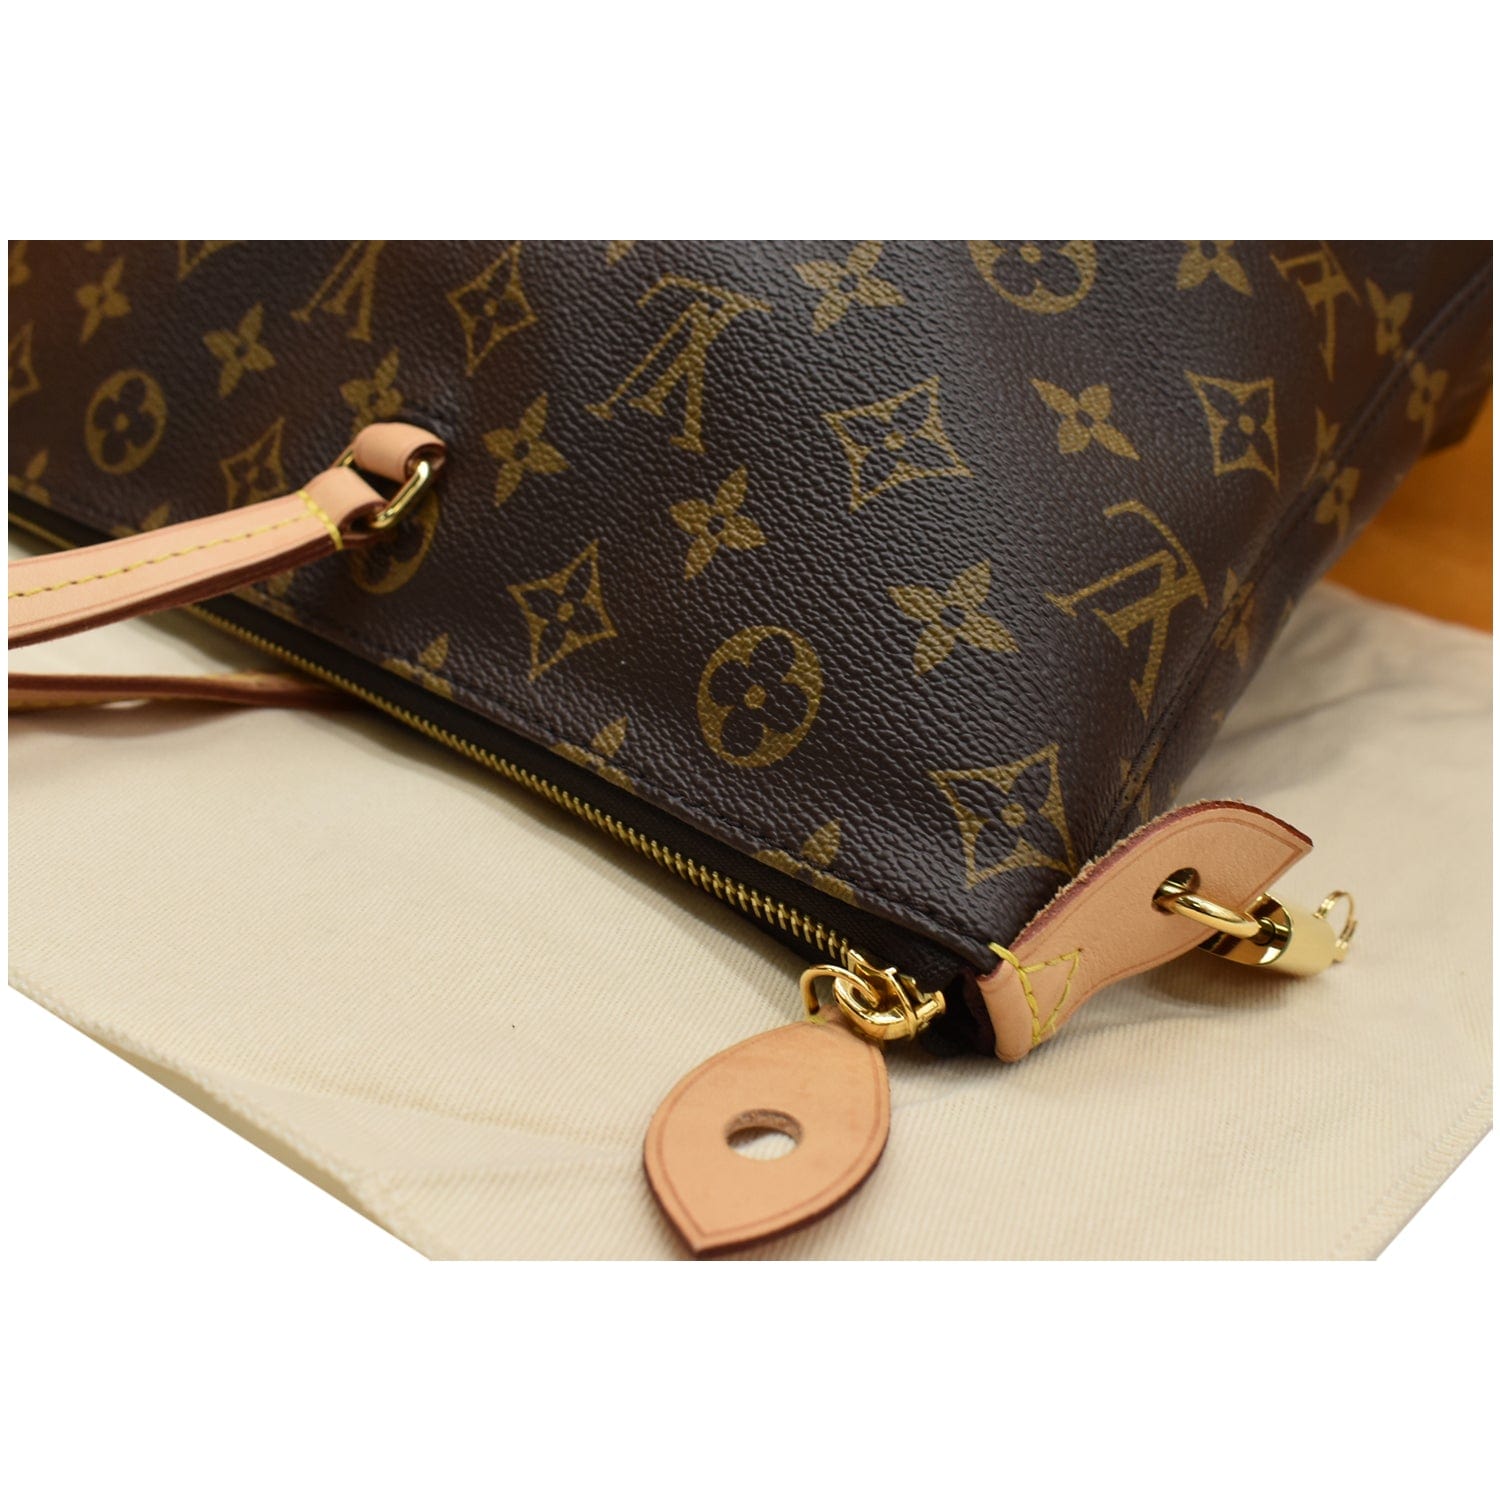 ❤️ Louis Vuitton woman bag canvas canvas print lv11